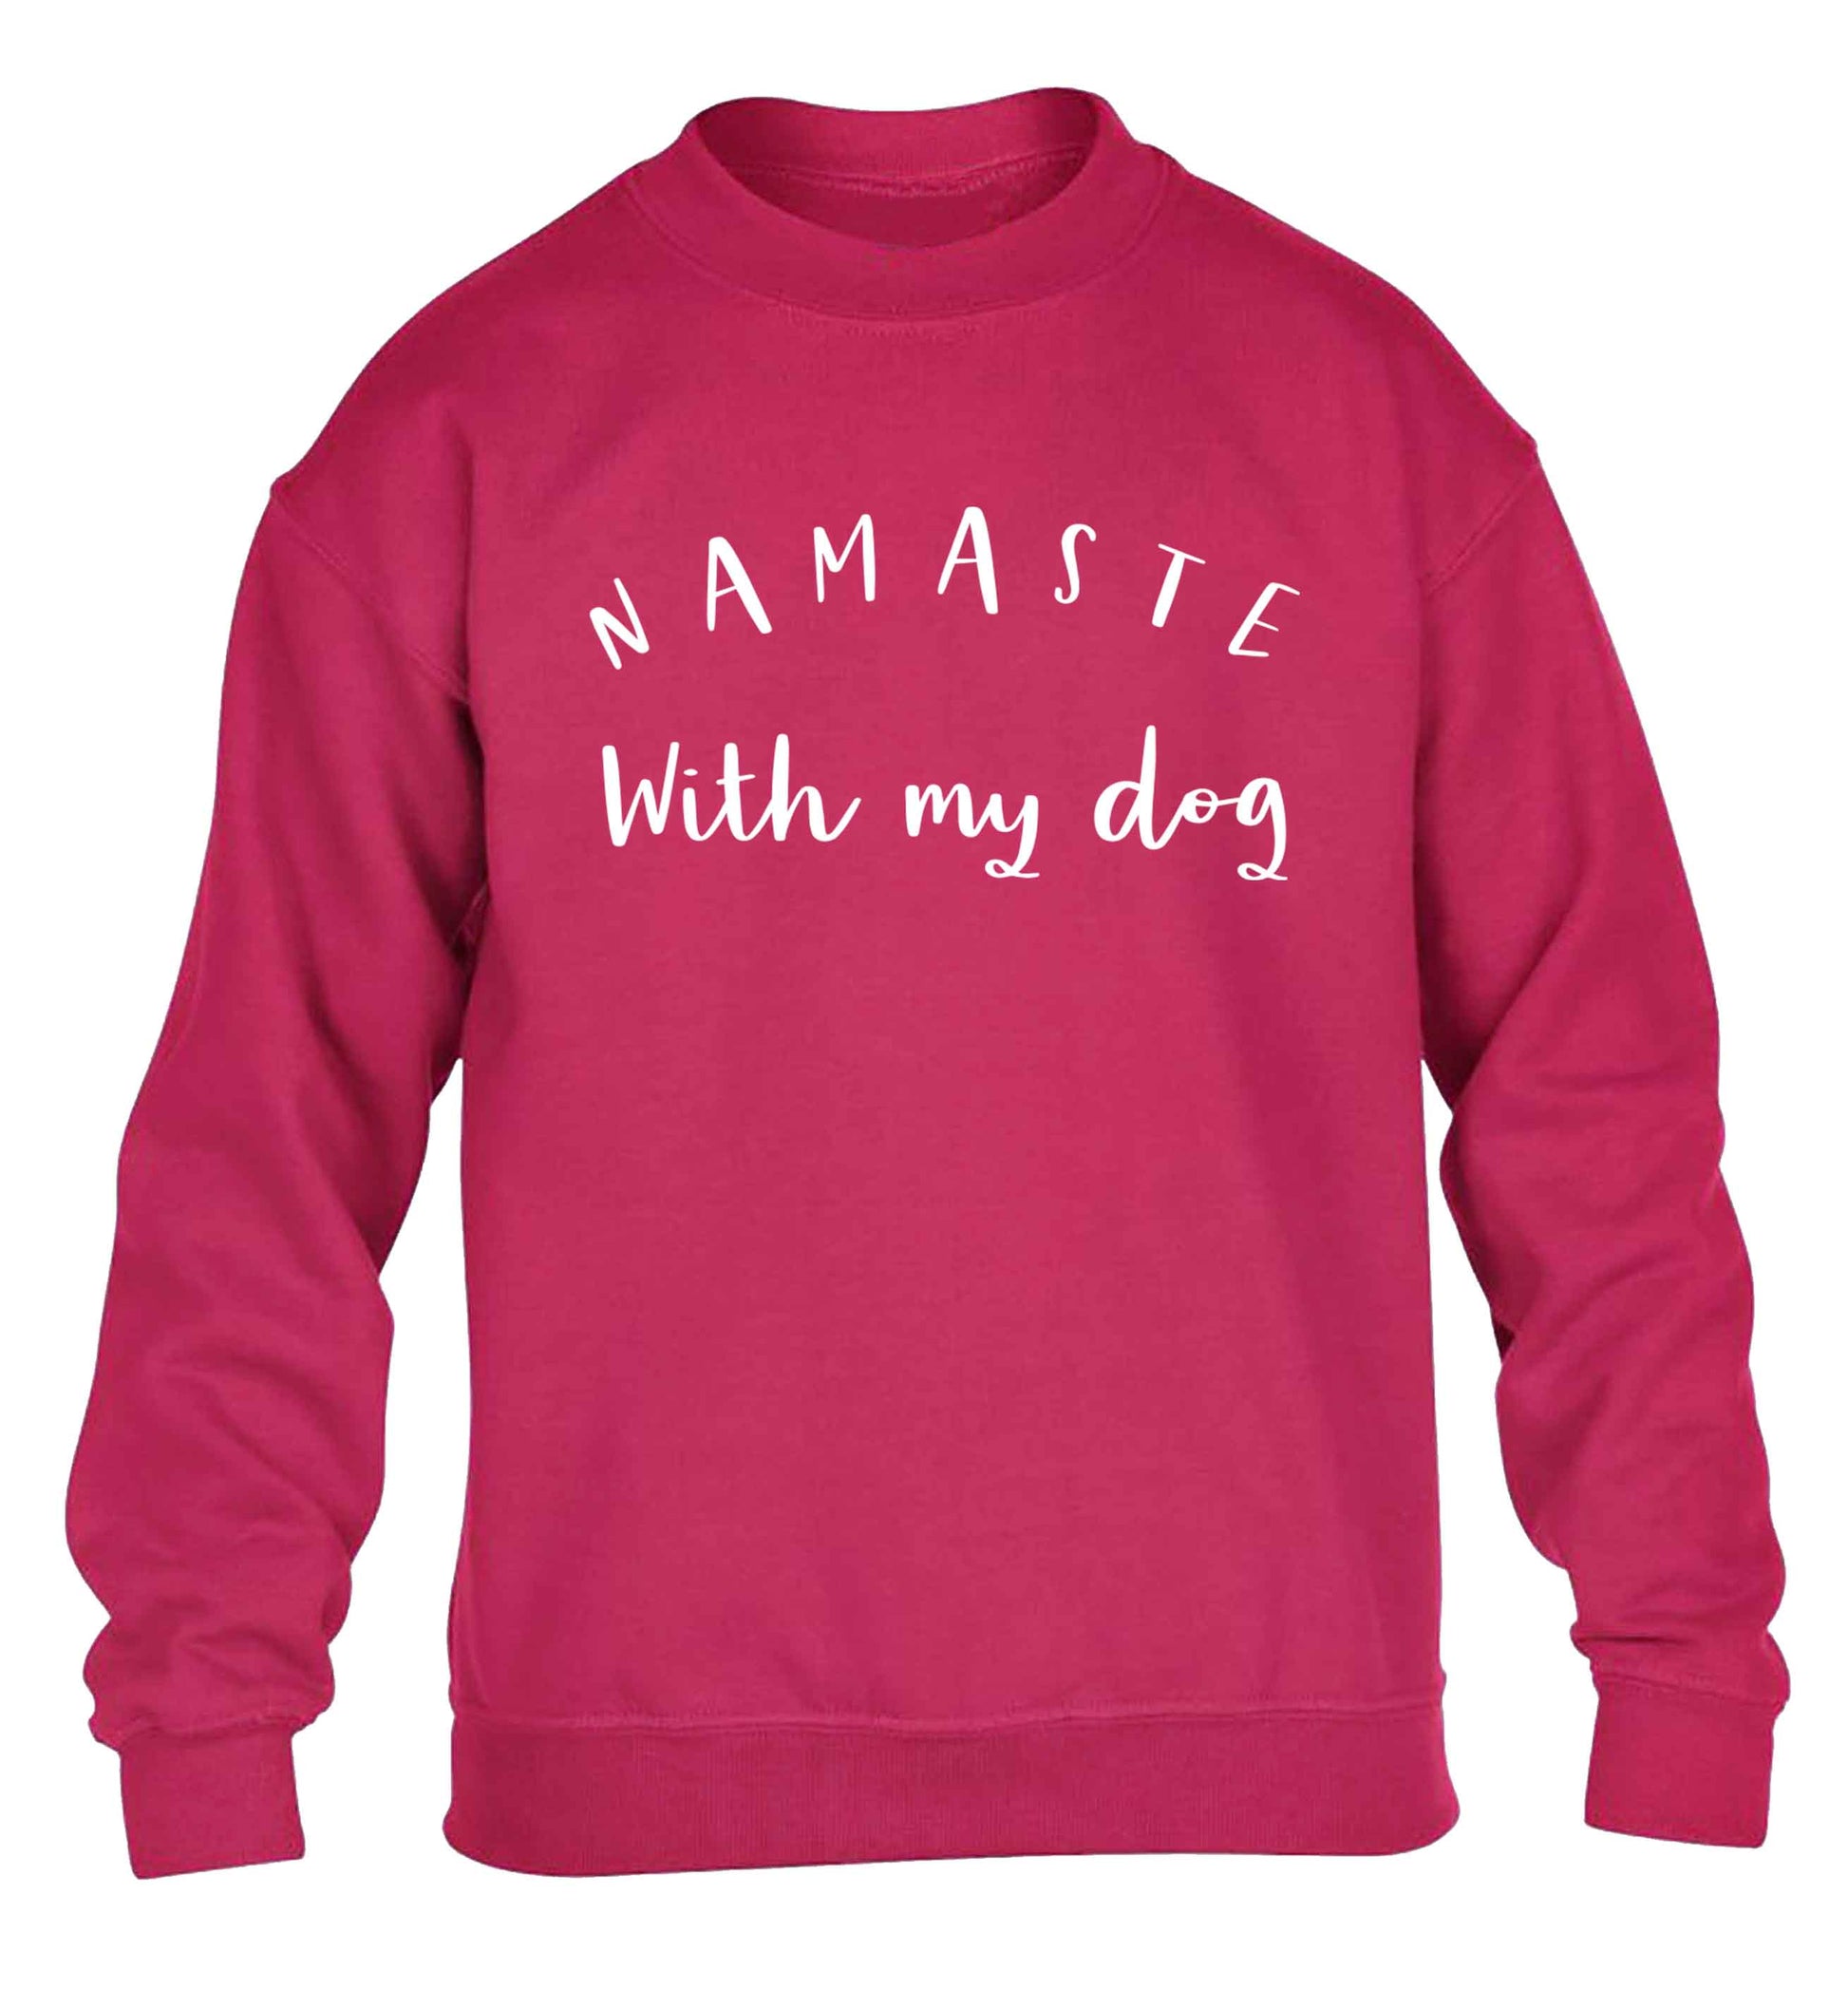 Namaste with my dog children's pink sweater 12-13 Years